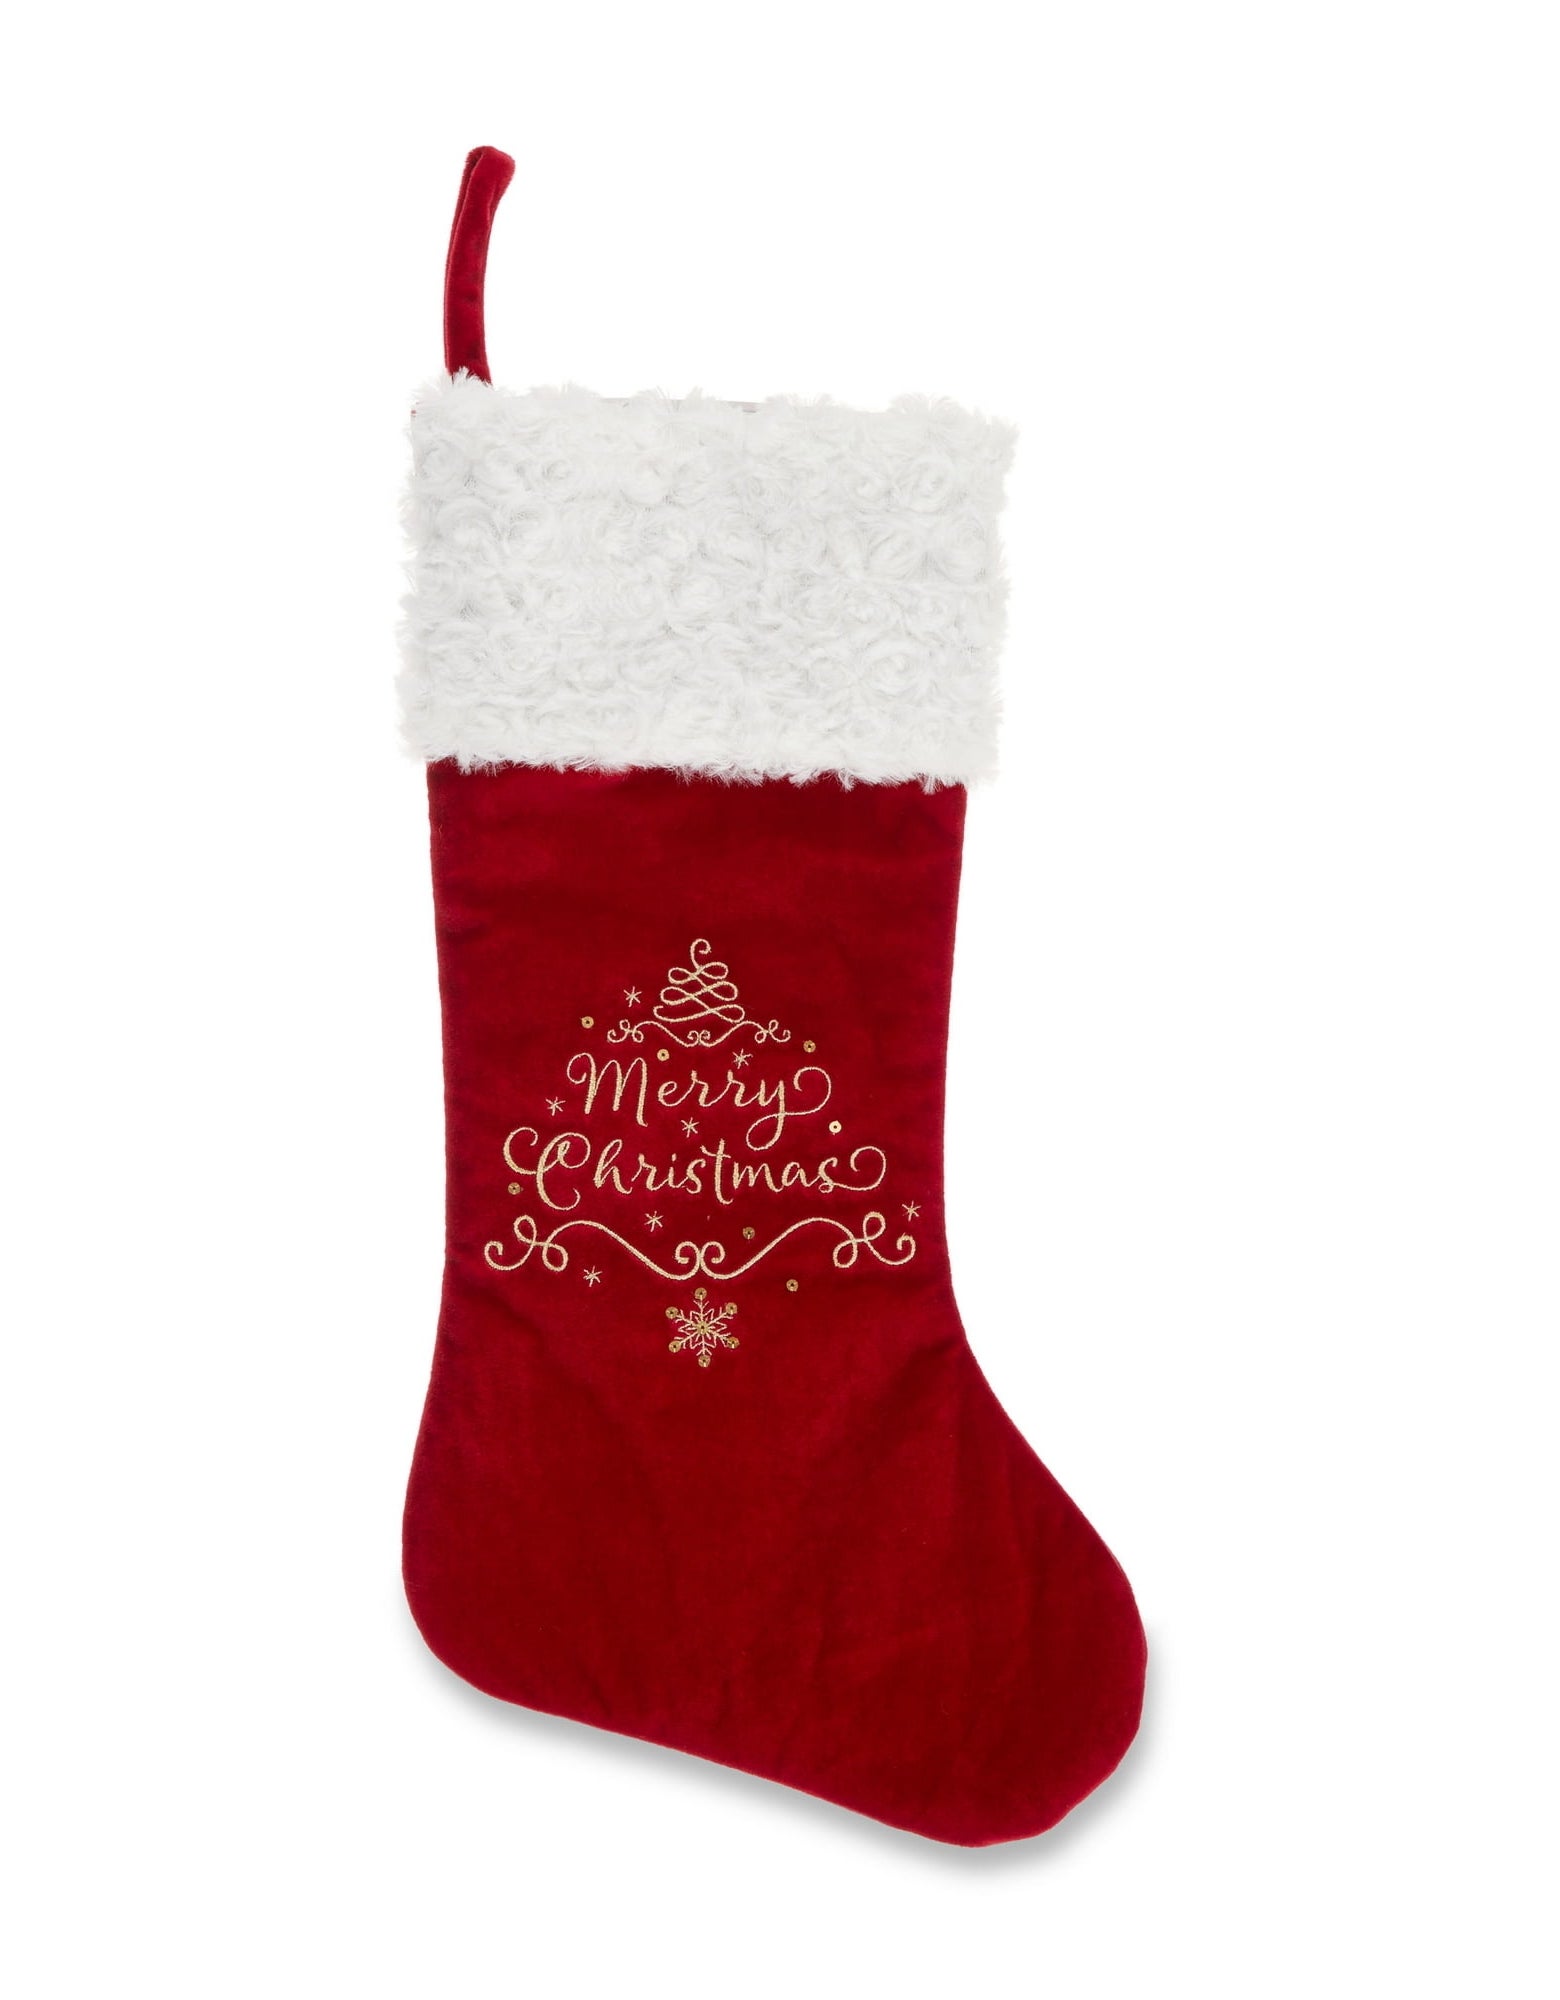 The stocking